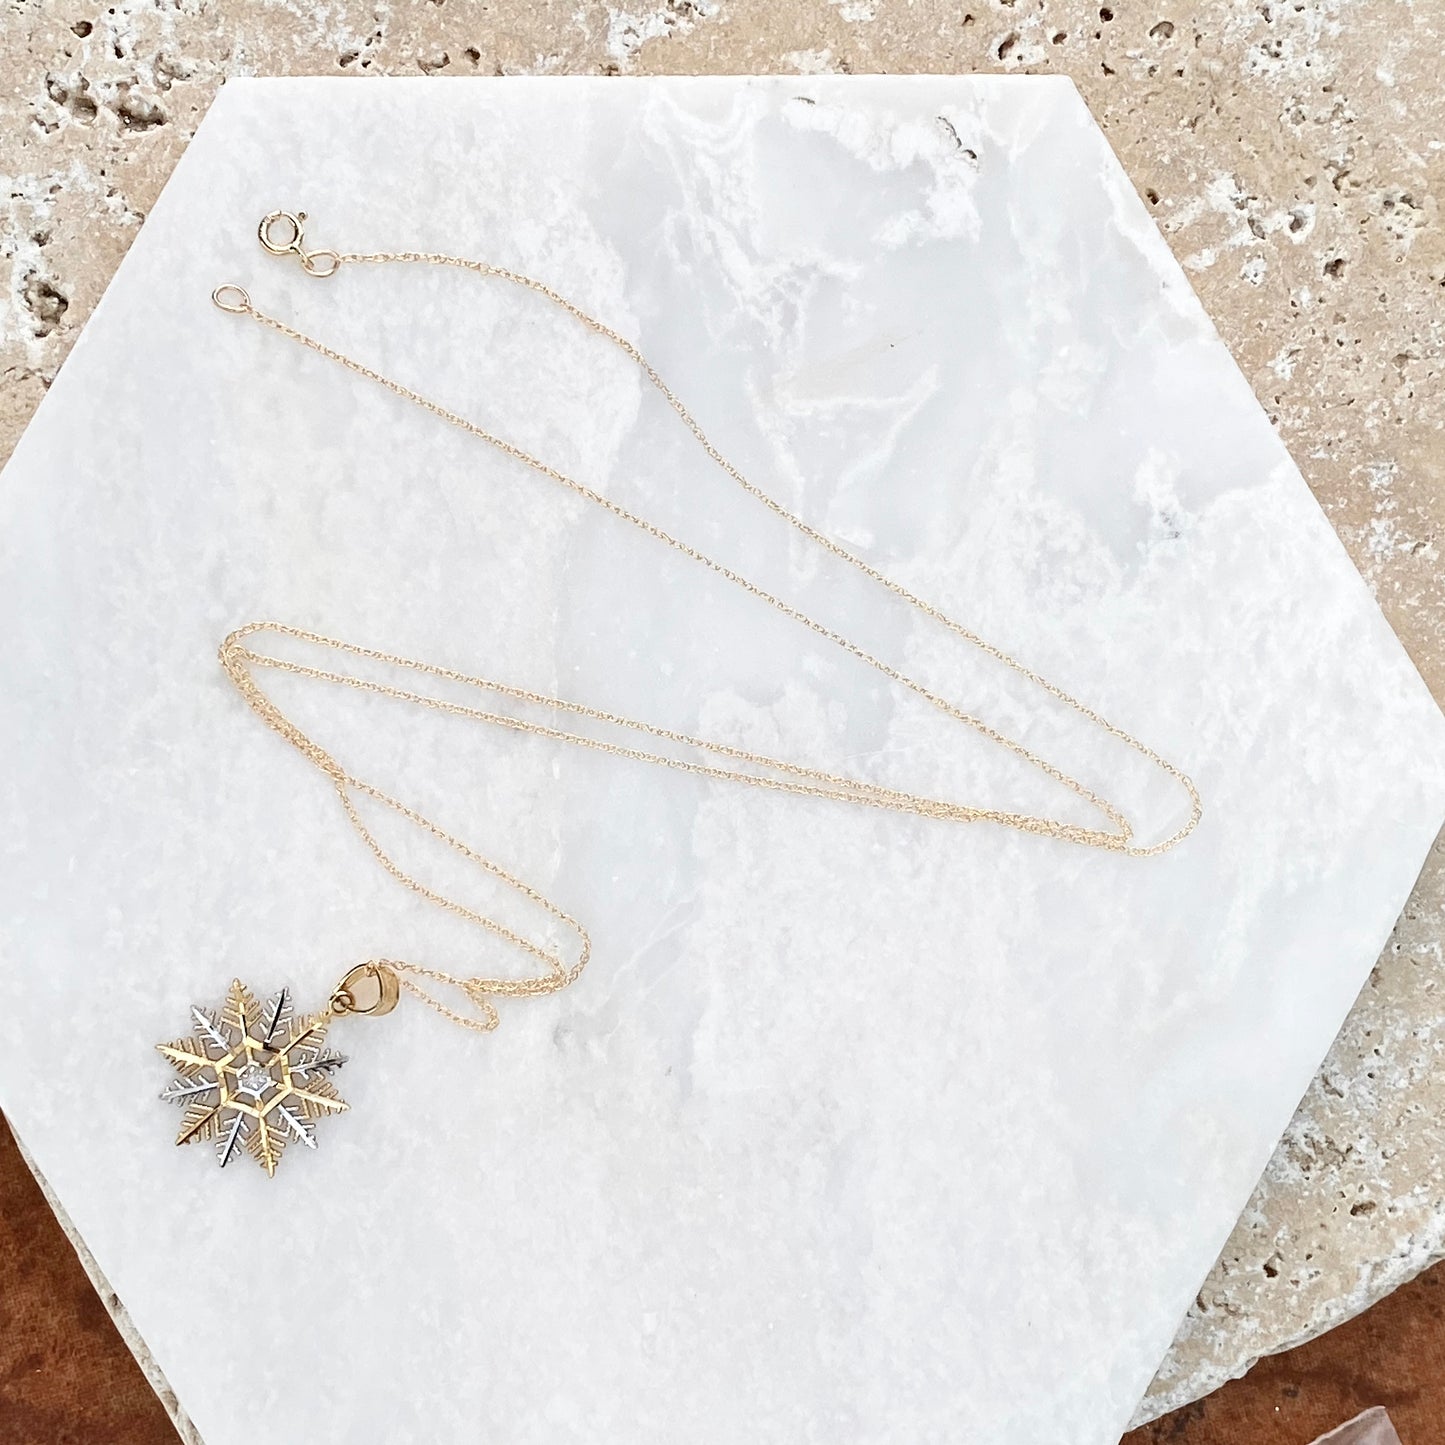 10KT Yellow Gold + White Rhodium Snowflake Pendant Chain Necklace, 10KT Yellow Gold + White Rhodium Snowflake Pendant Chain Necklace - Legacy Saint Jewelry